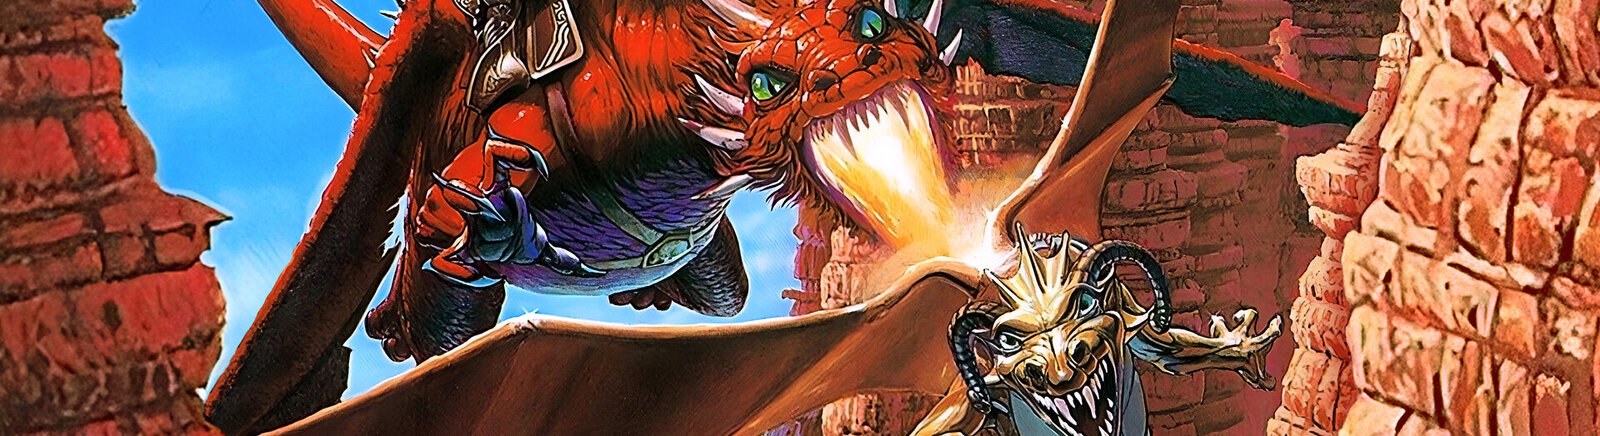 Дата выхода DragonStrike (1990) (Dragon Strike)  на Commodore 64, Amiga и PC-98 в России и во всем мире